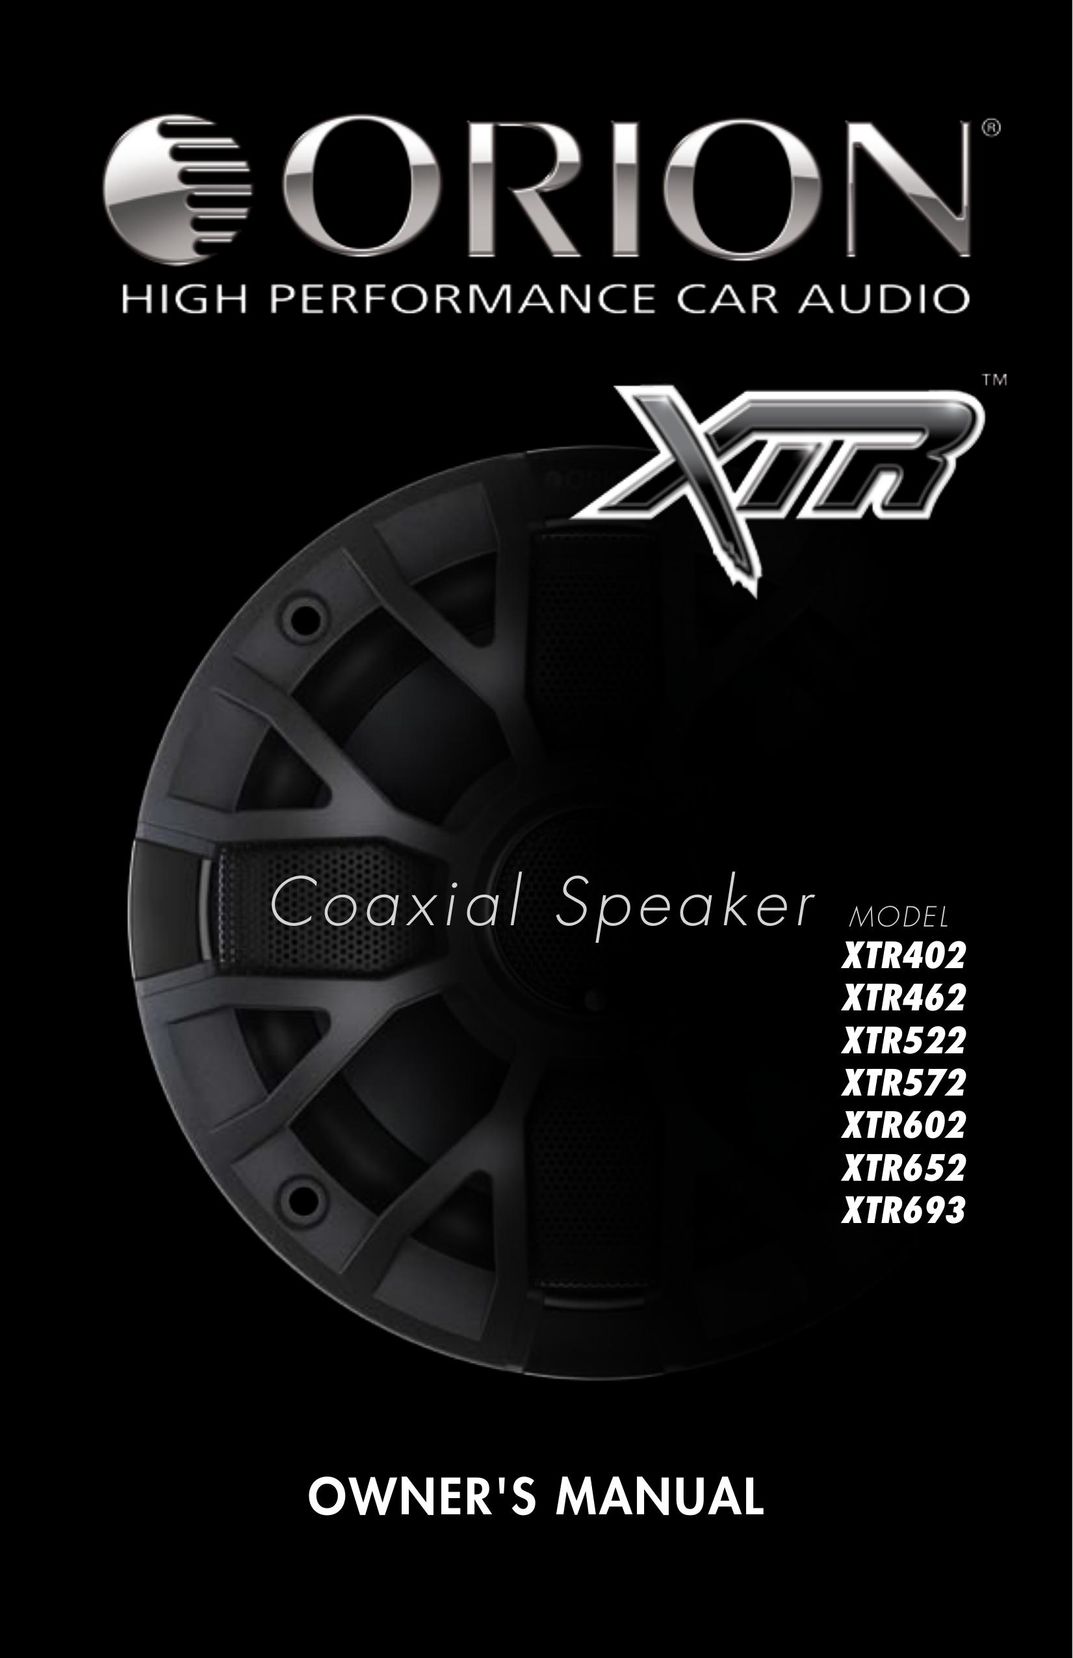 Orion Car Audio XTR572 Car Speaker User Manual